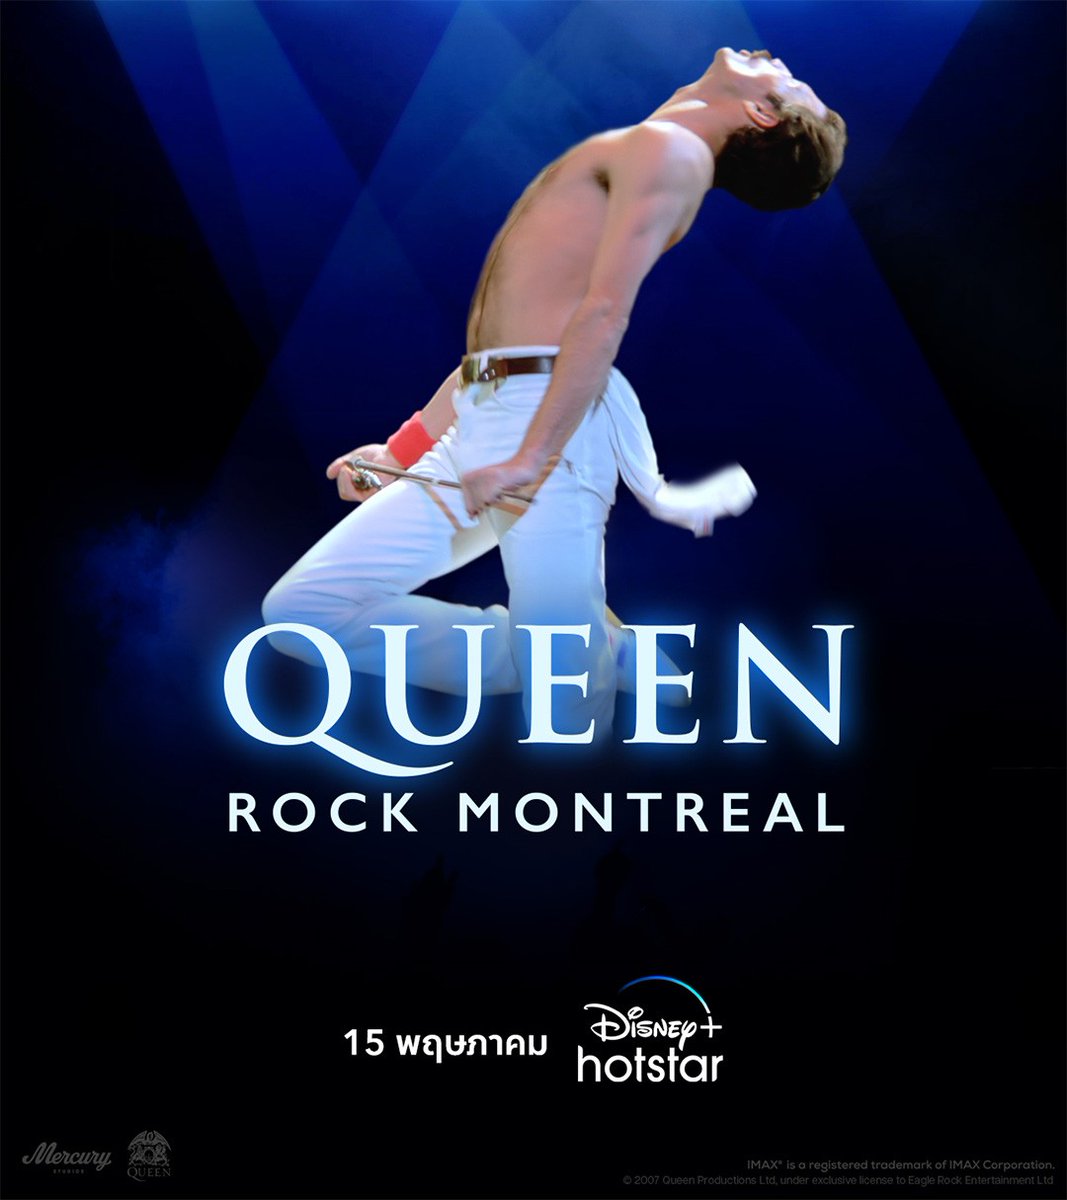 Queen Rock Montreal หนึ่งในคอนเสิร์ตที่ยิ่งใหญ่ที่สุดของ Queen จะลงให้ชมทาง Disney+ Hotstar วันที่ 15 พฤษภาคมนี้